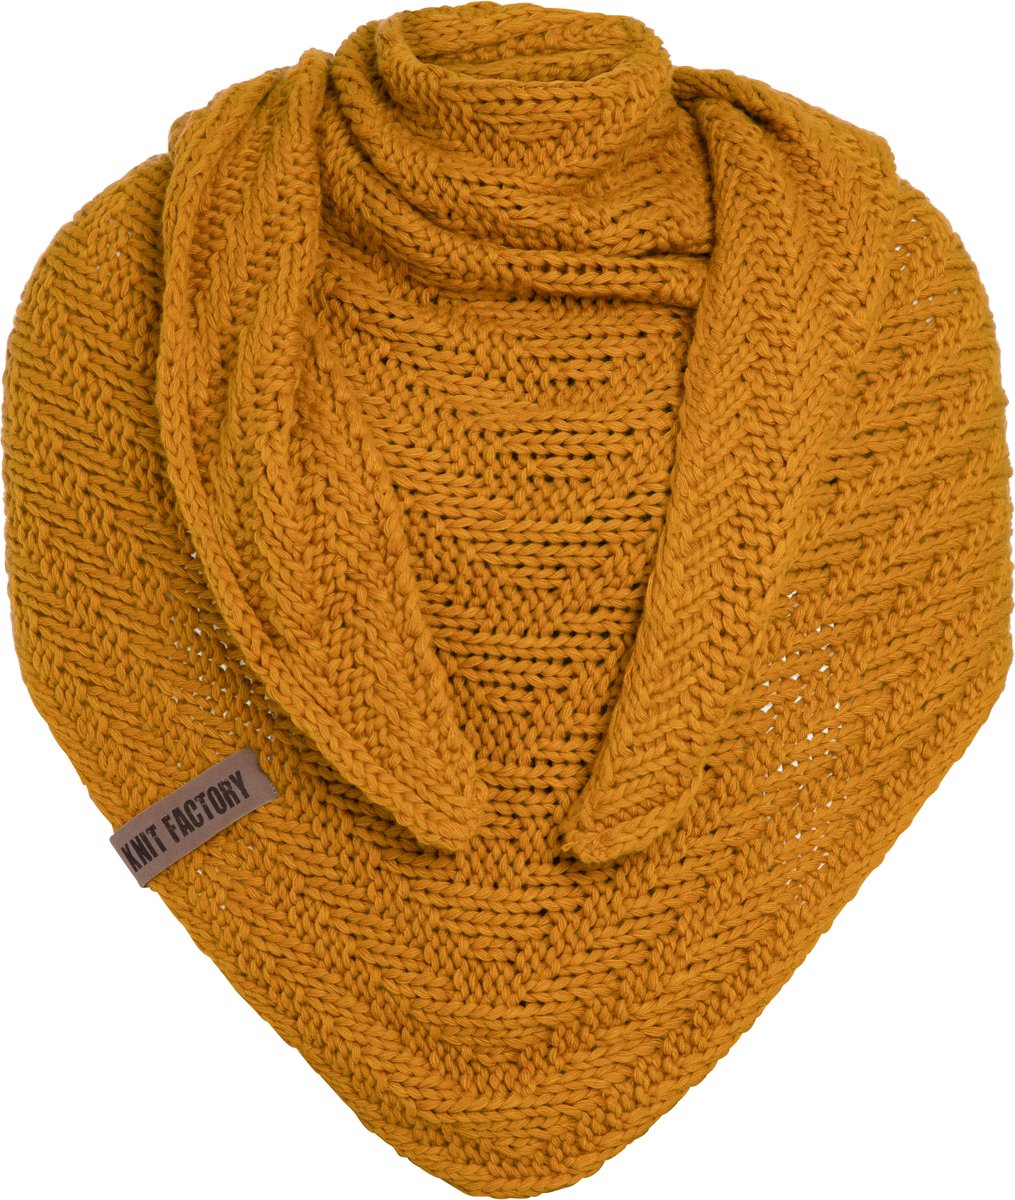 Knit Factory Sally Gebreide Omslagdoek - Driehoek Sjaal Dames - Dames sjaal - Wintersjaal - Stola - Wollen sjaal - Gele sjaal - Oker - 220x85 cm - Grof gebreid